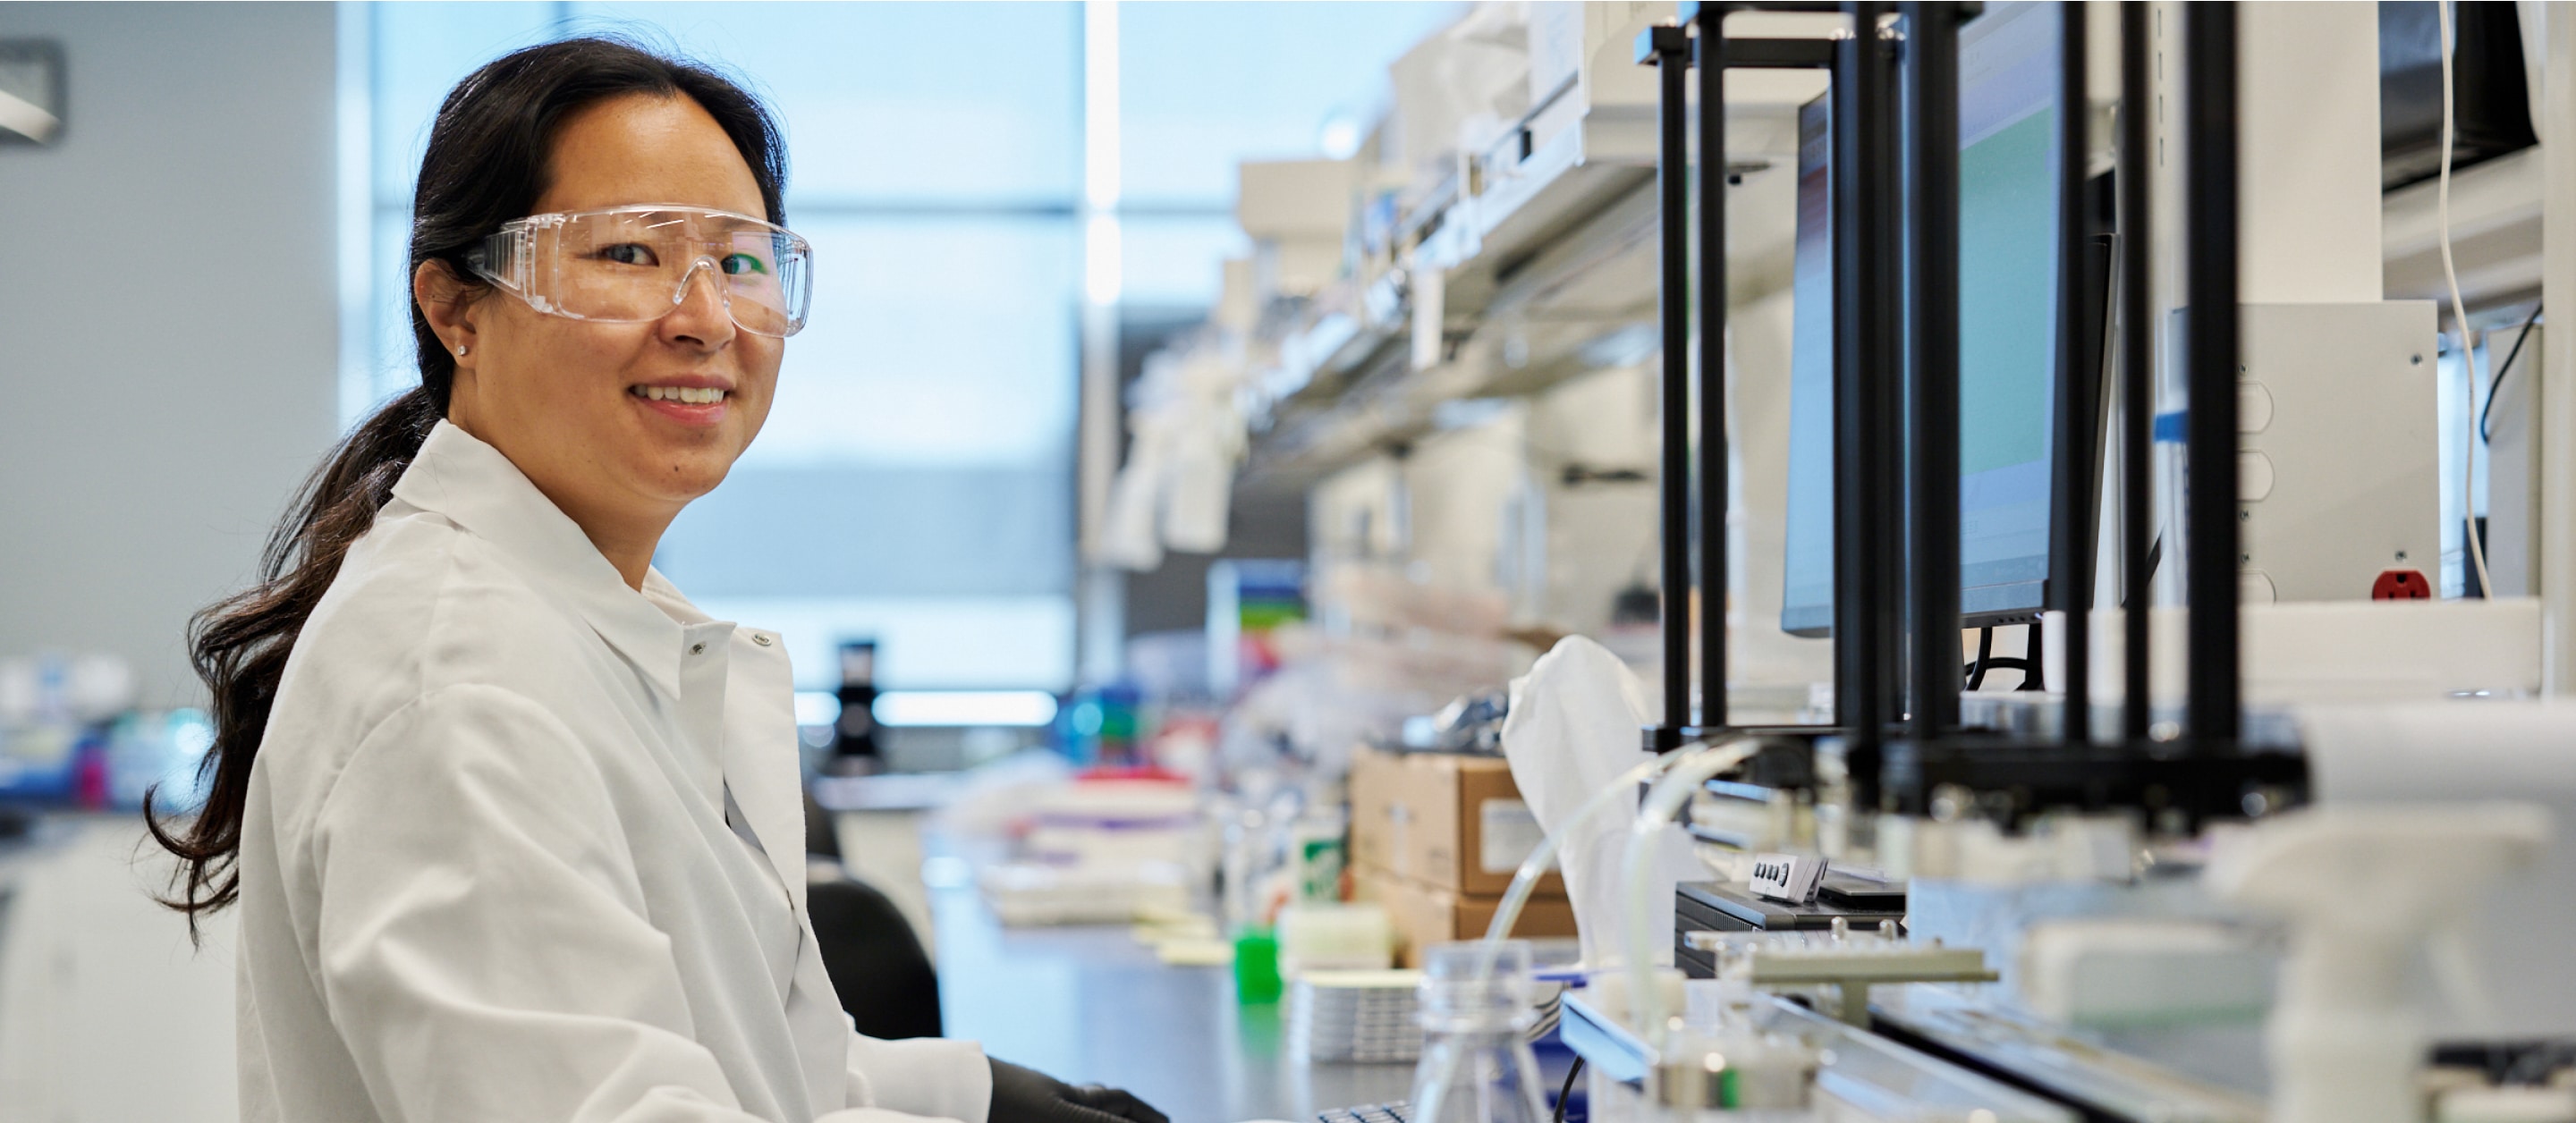 Female scientist in lab smiling at camera